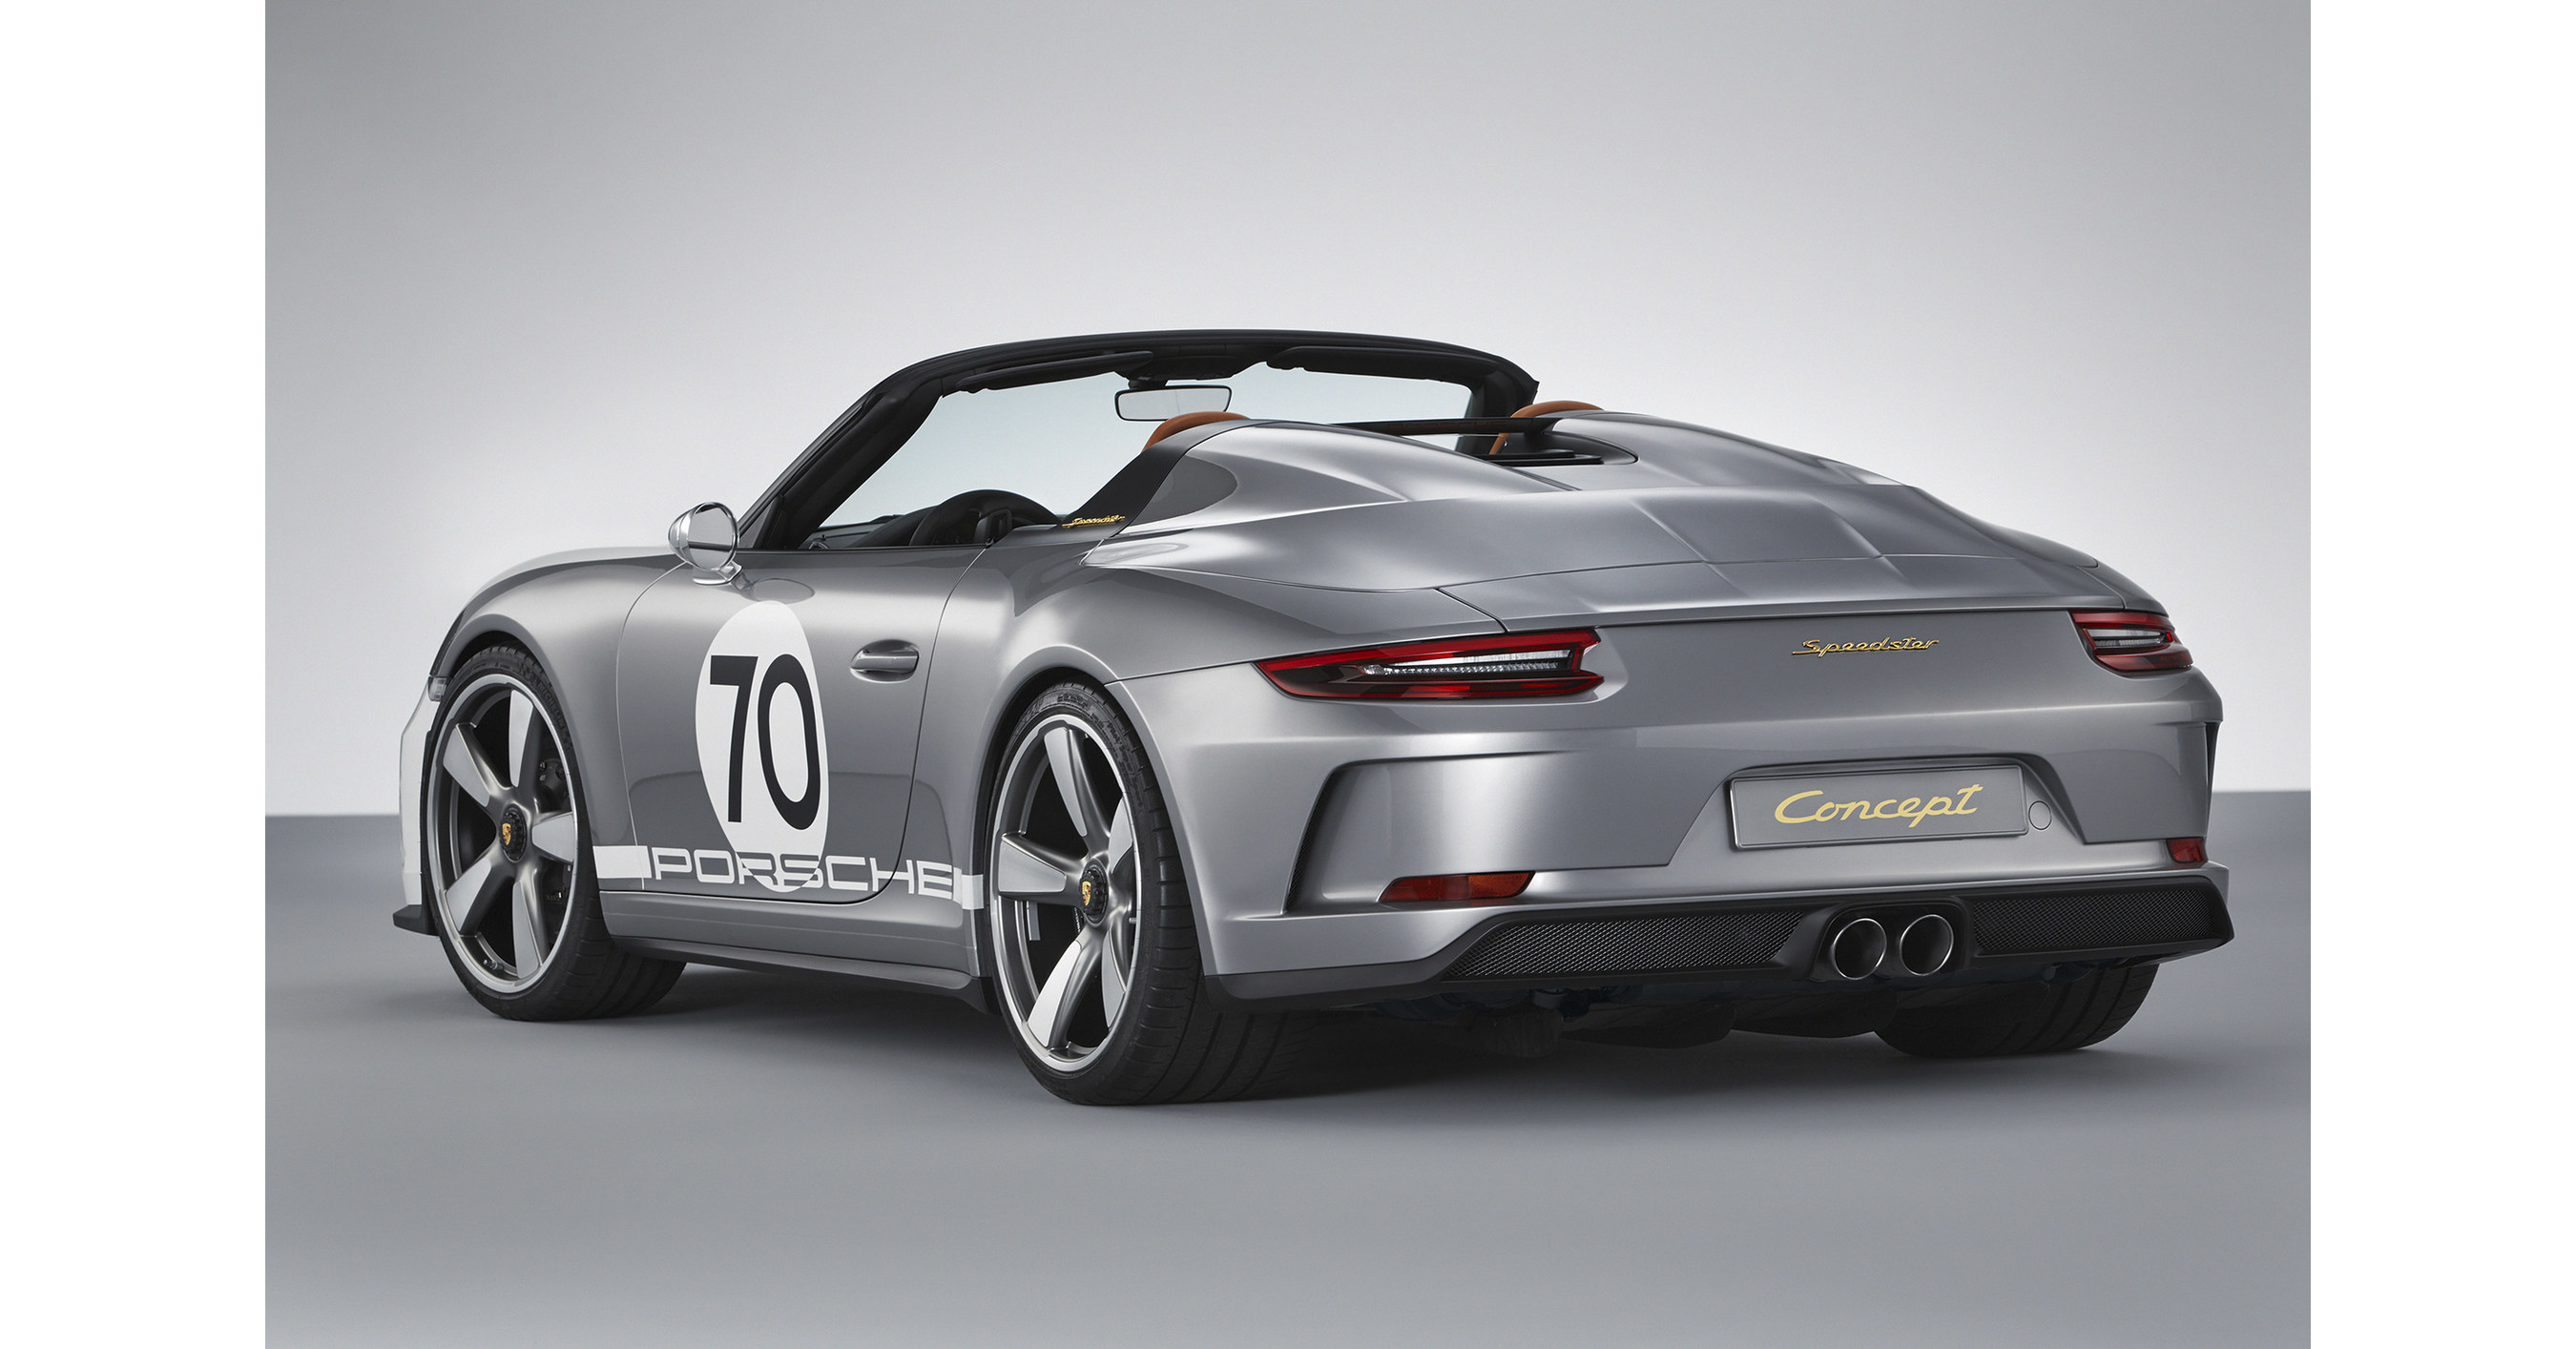 Restored Porsche 911 combines heritage and fashion - Porsche Newsroom